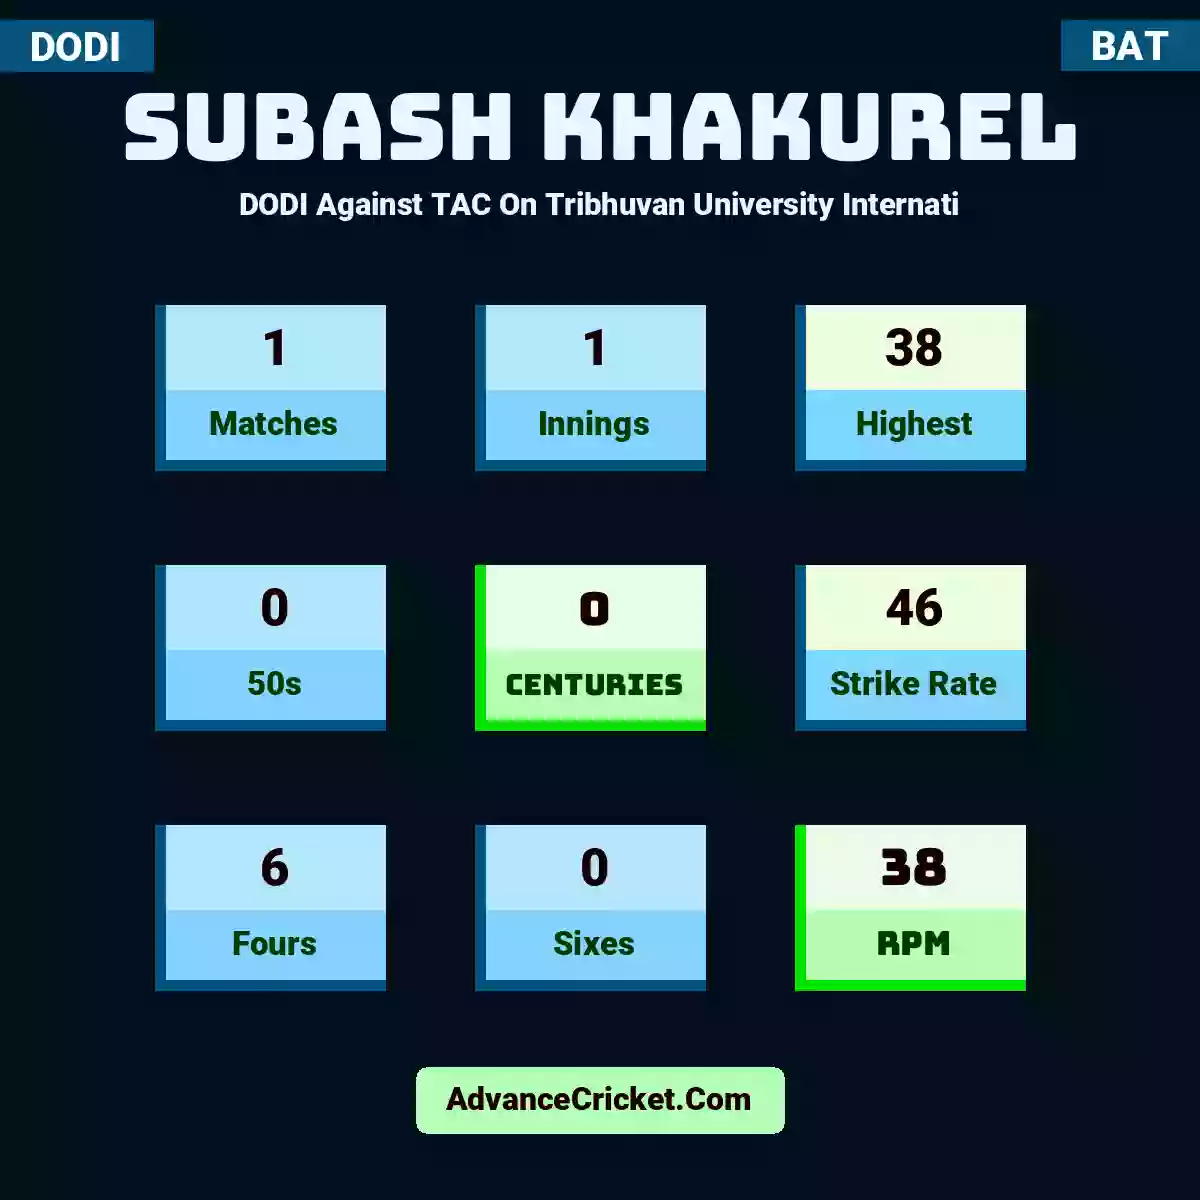 Subash Khakurel DODI  Against TAC On Tribhuvan University Internati, Subash Khakurel played 1 matches, scored 38 runs as highest, 0 half-centuries, and 0 centuries, with a strike rate of 46. S.Khakurel hit 6 fours and 0 sixes, with an RPM of 38.